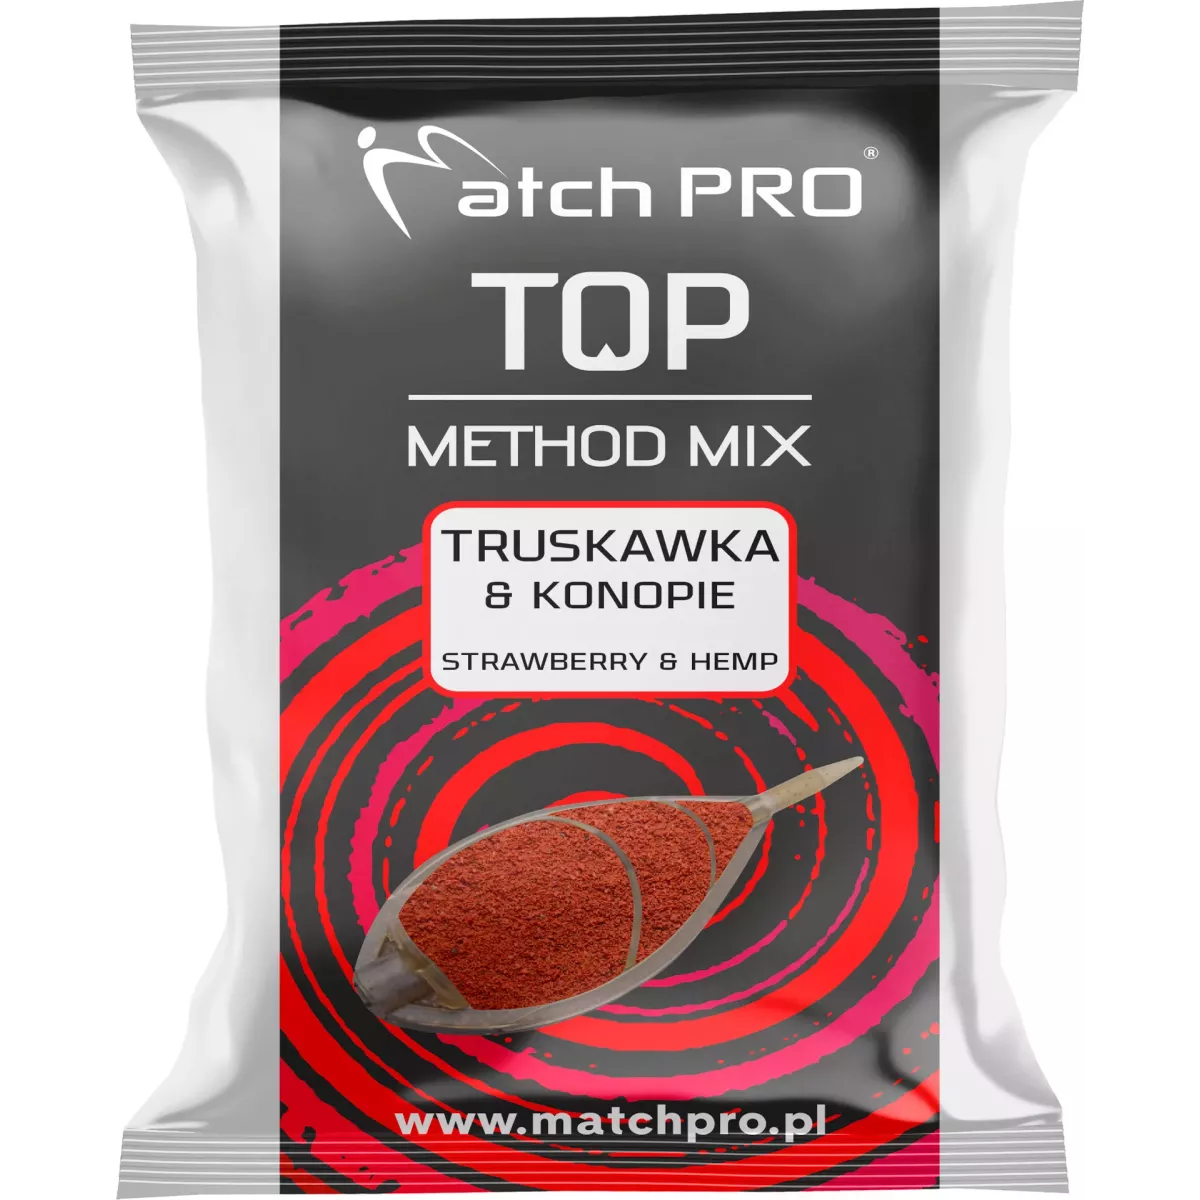 Zanęta MatchPro Method Mix TOP 700g - TRUSKAWKA & KONOPIE